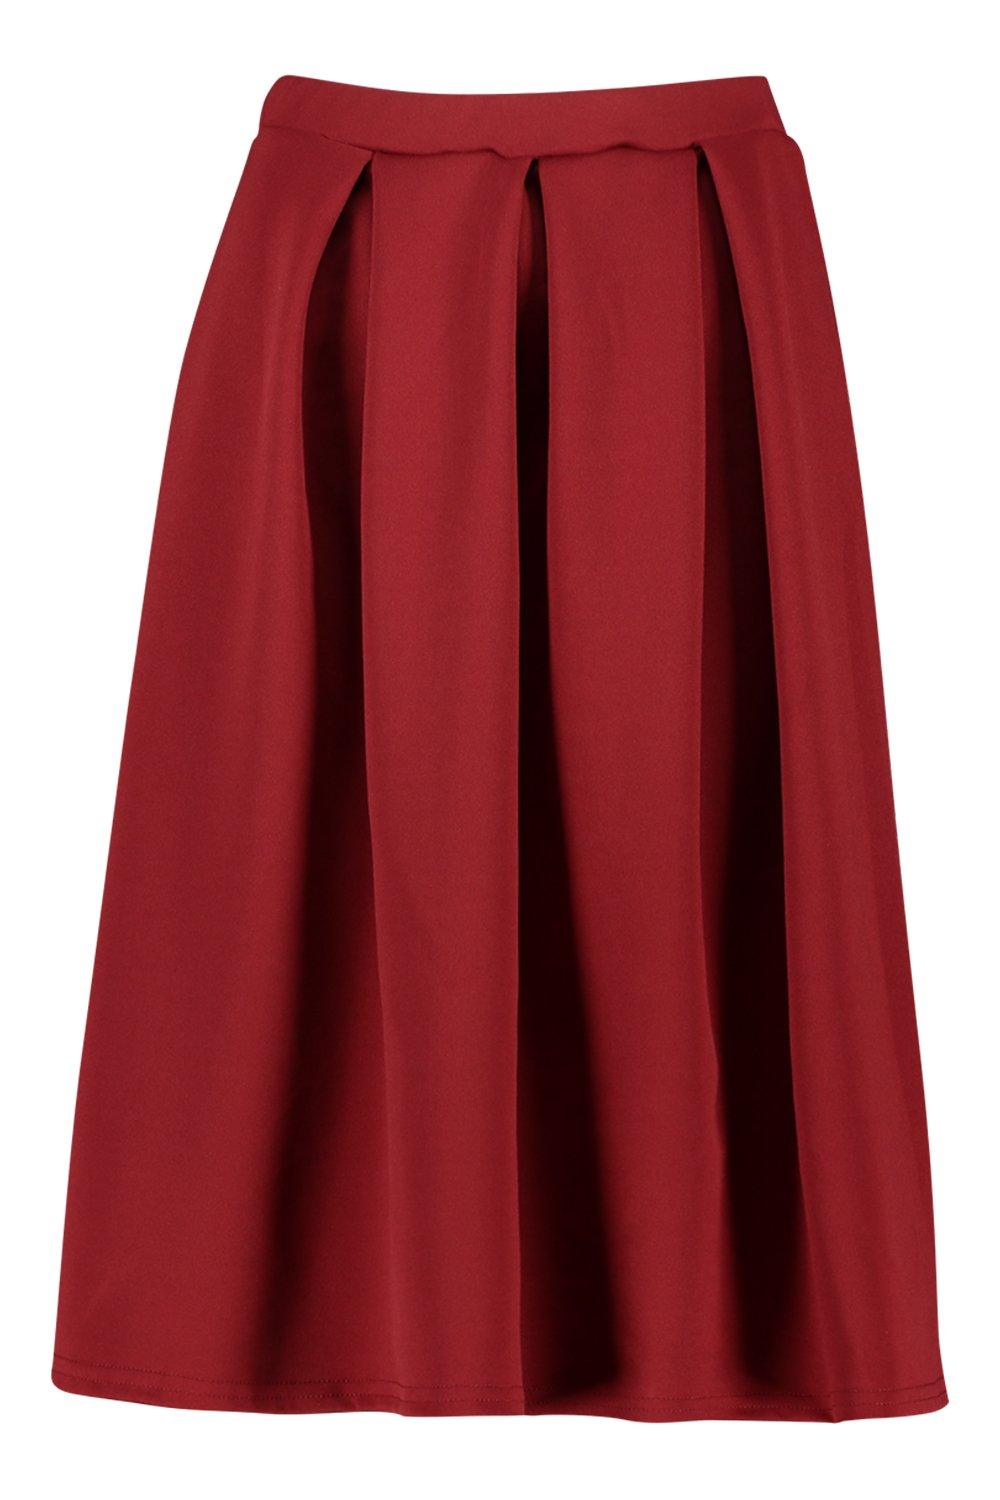 Boohoo Womens Beau Box Pleat Midi Skirt Ebay 